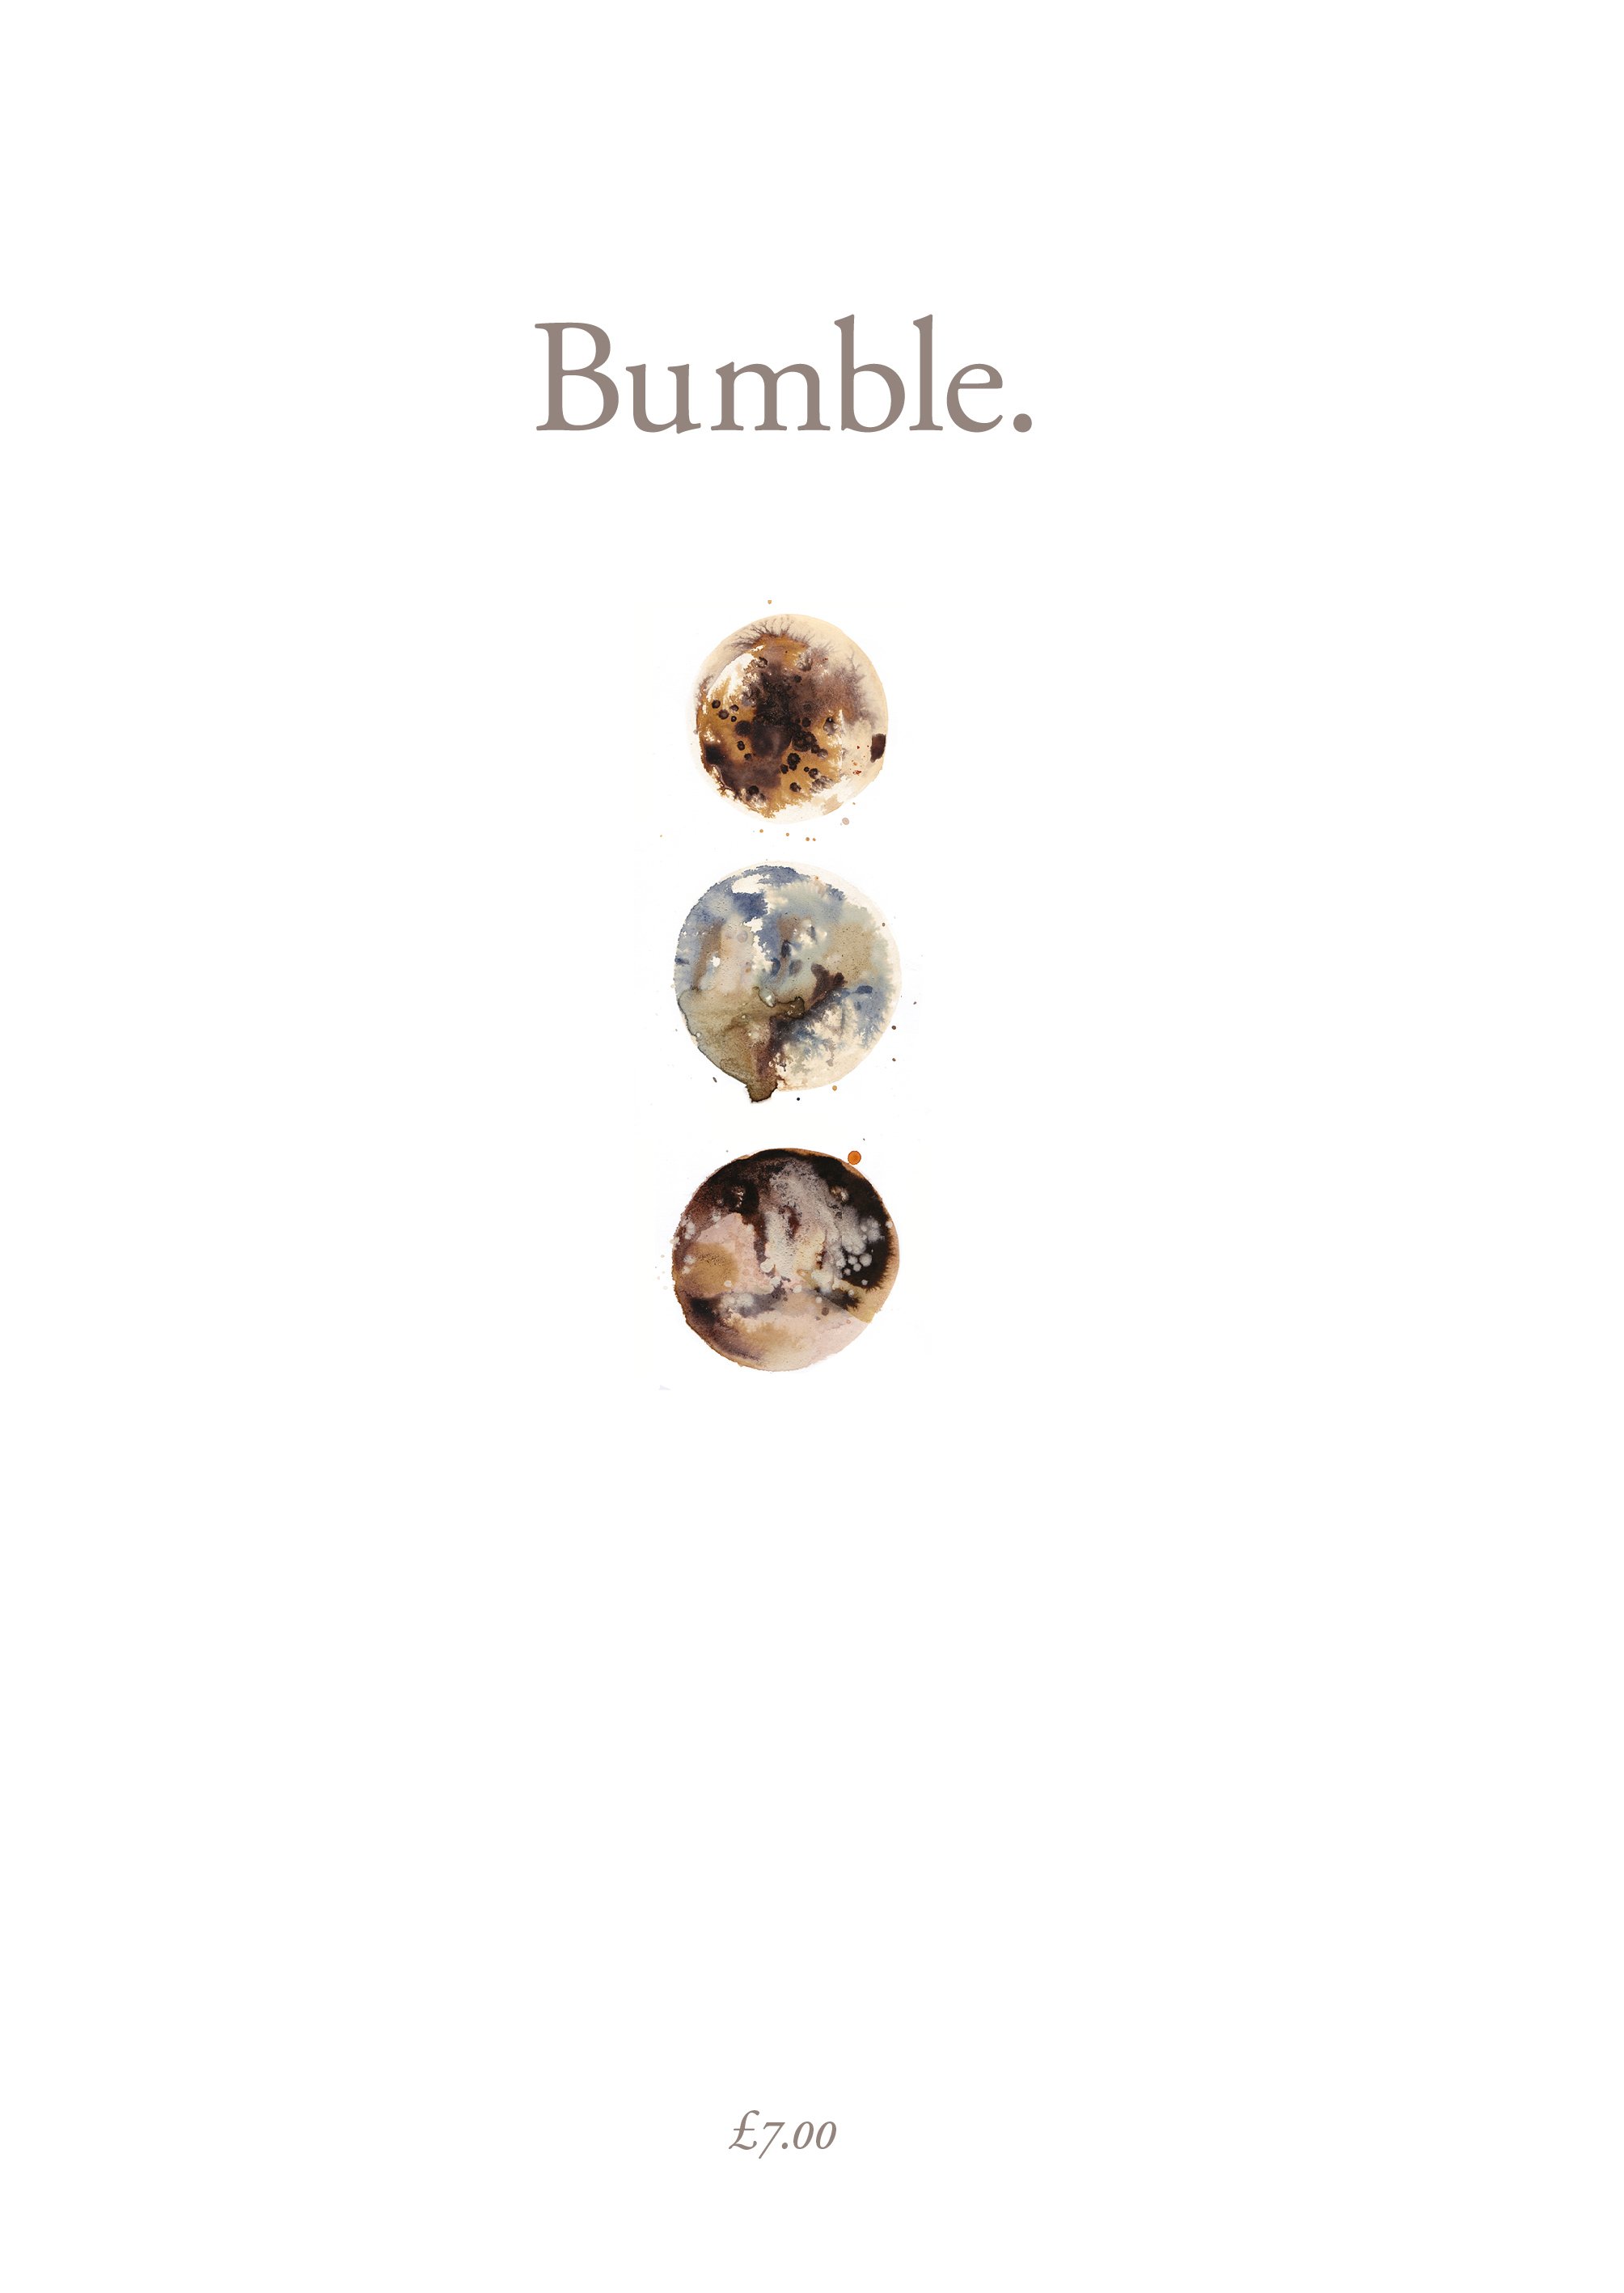 Bumble—Issue Three51.jpg